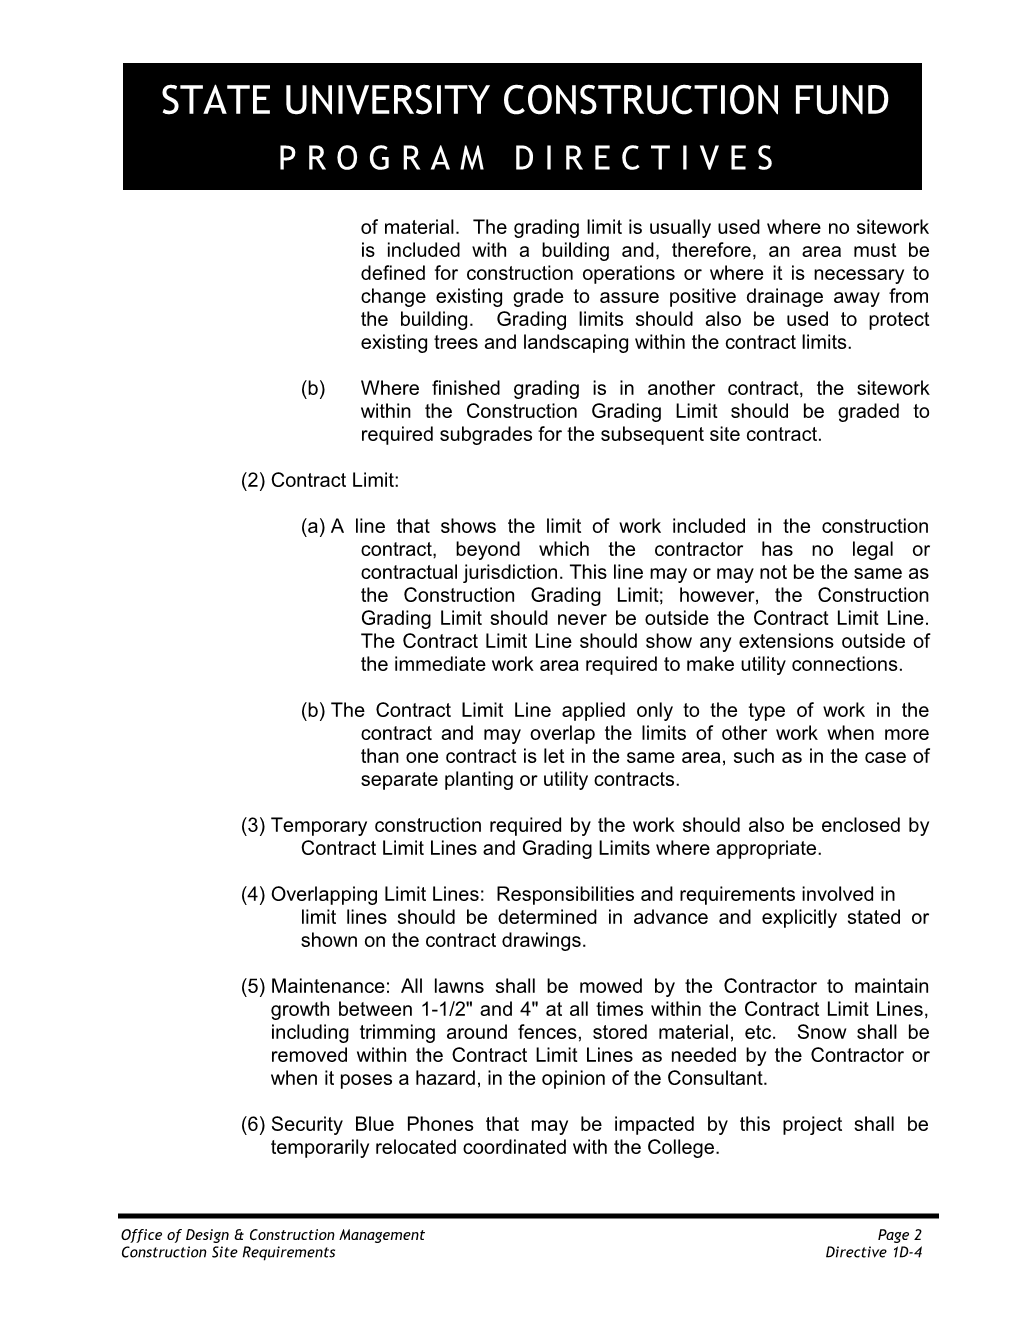 Directive 1D-4 Construction Site Requirements